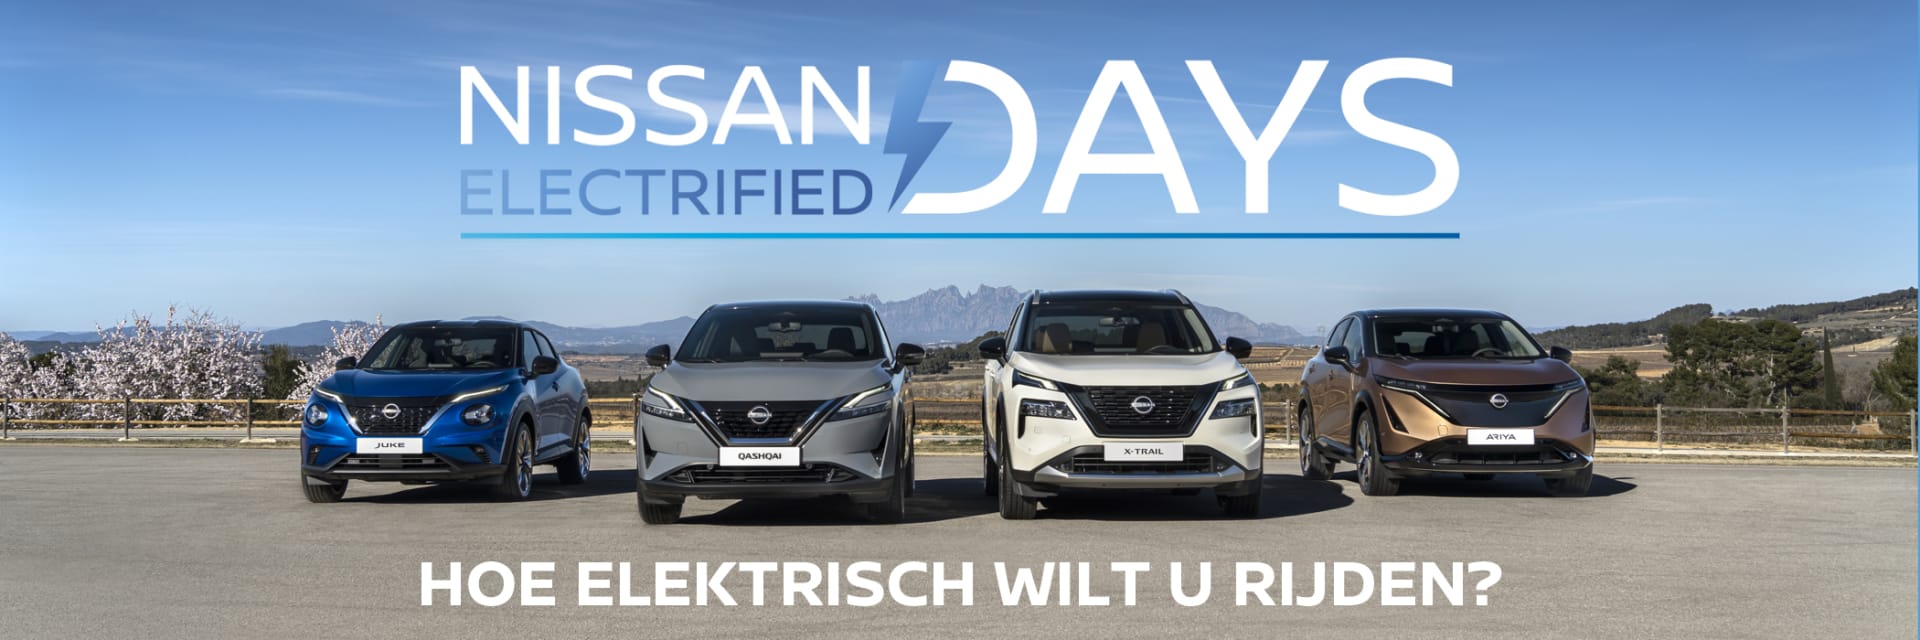 Nissan Electrified Days